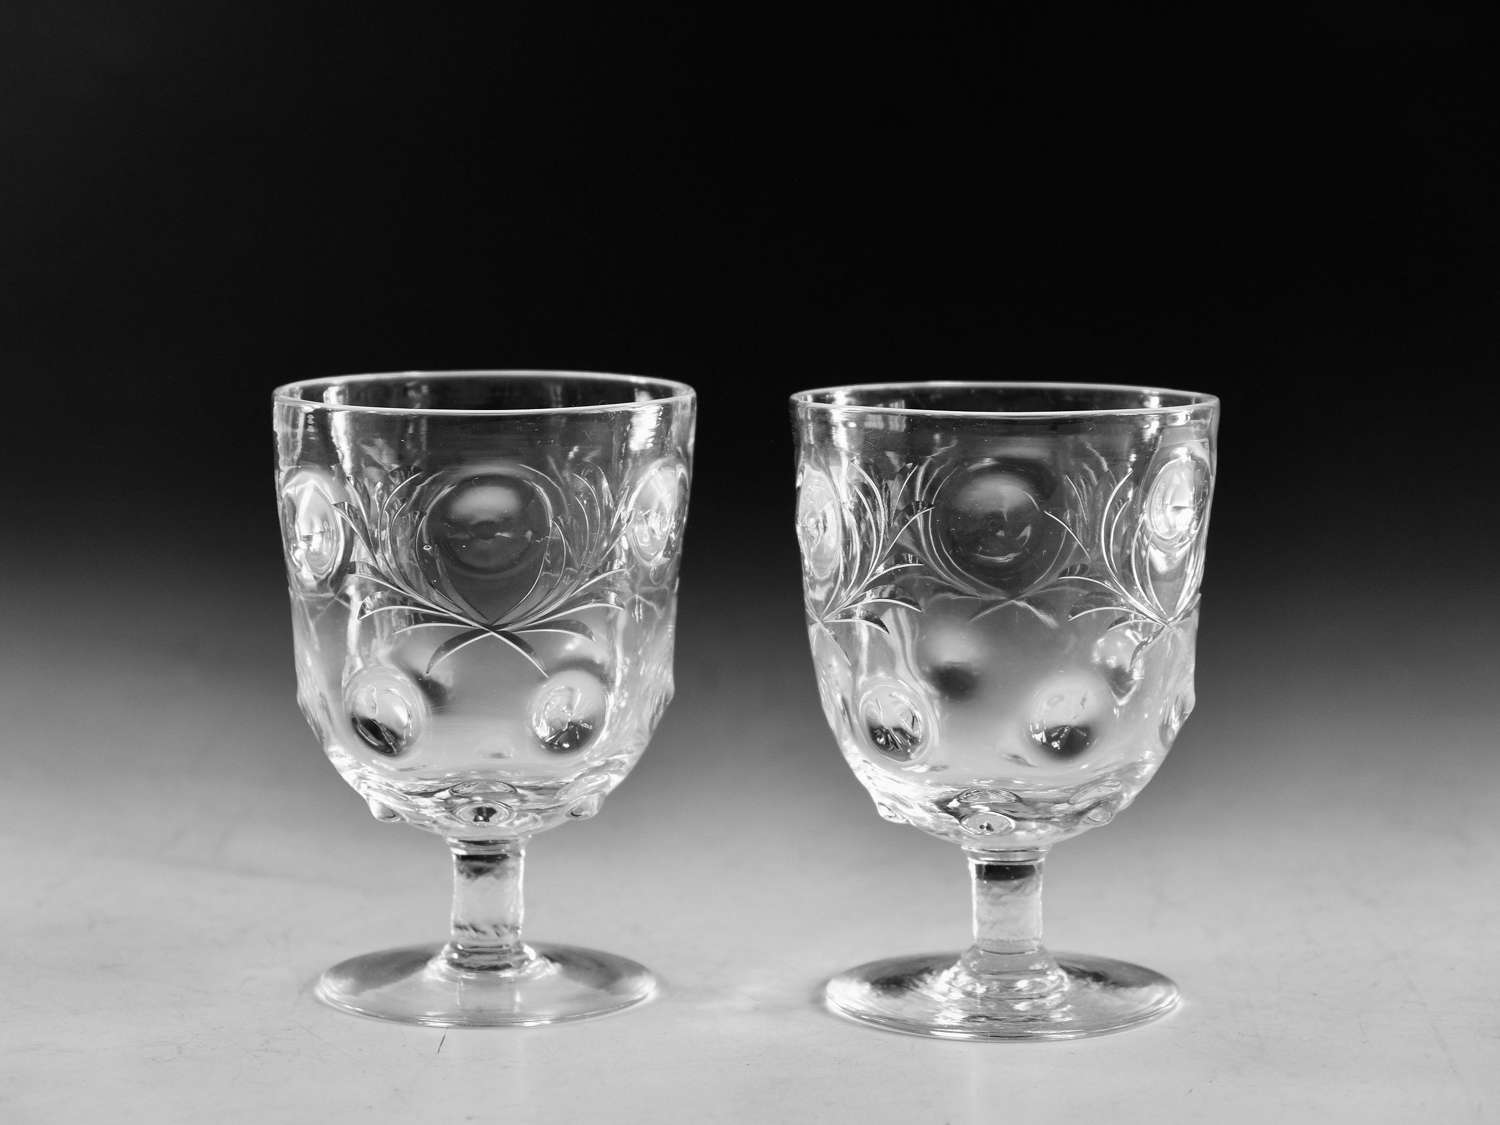 Antique glass - pair of Webb wine glasses c1906 -1935